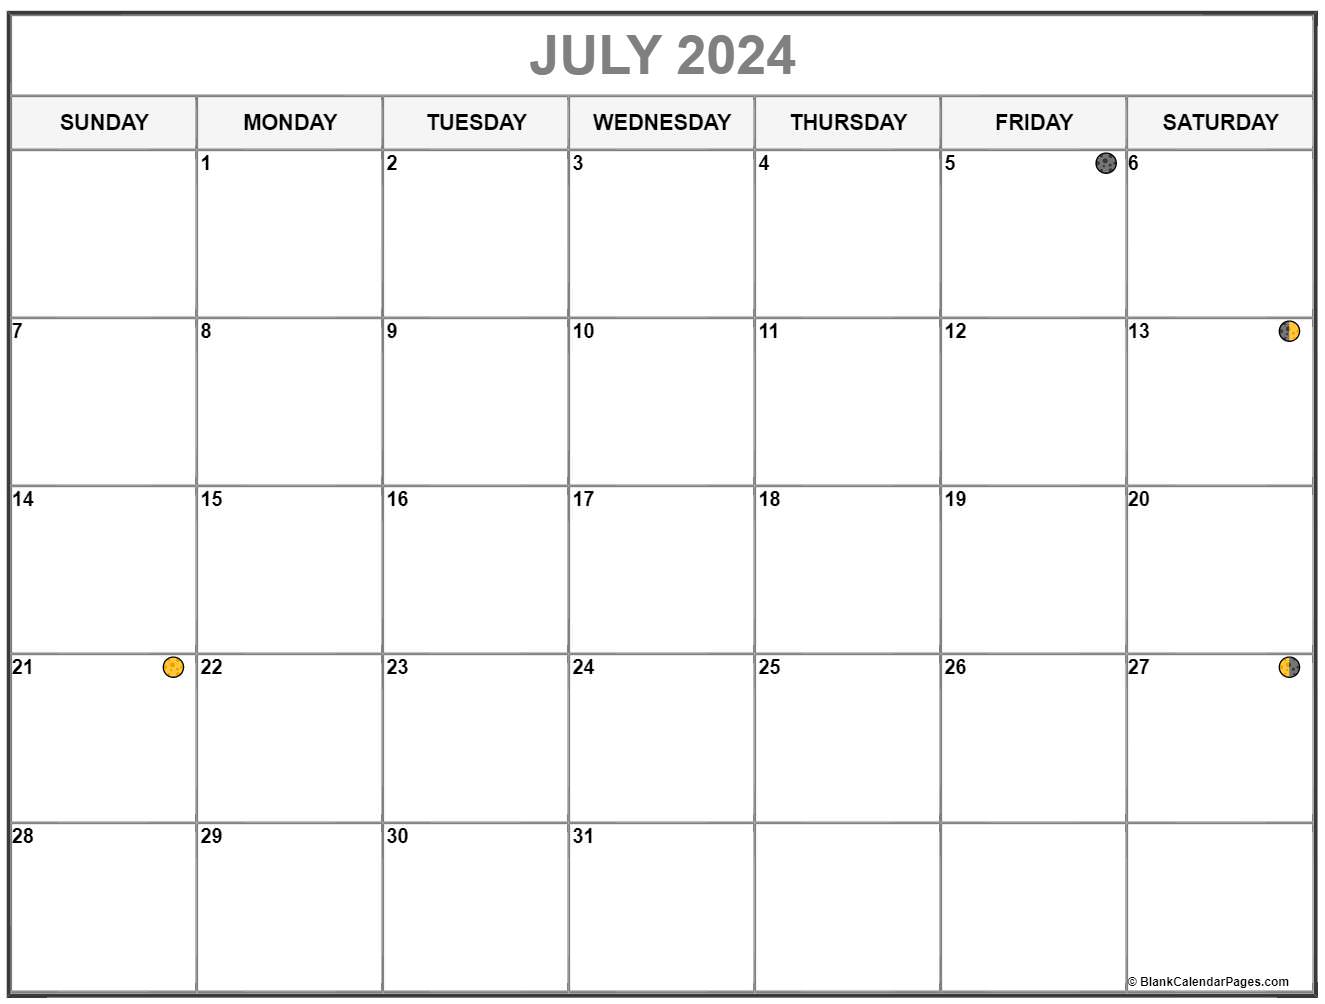 Moon Calendar July 2022 July 2021 Lunar Calendar | Moon Phase Calendar